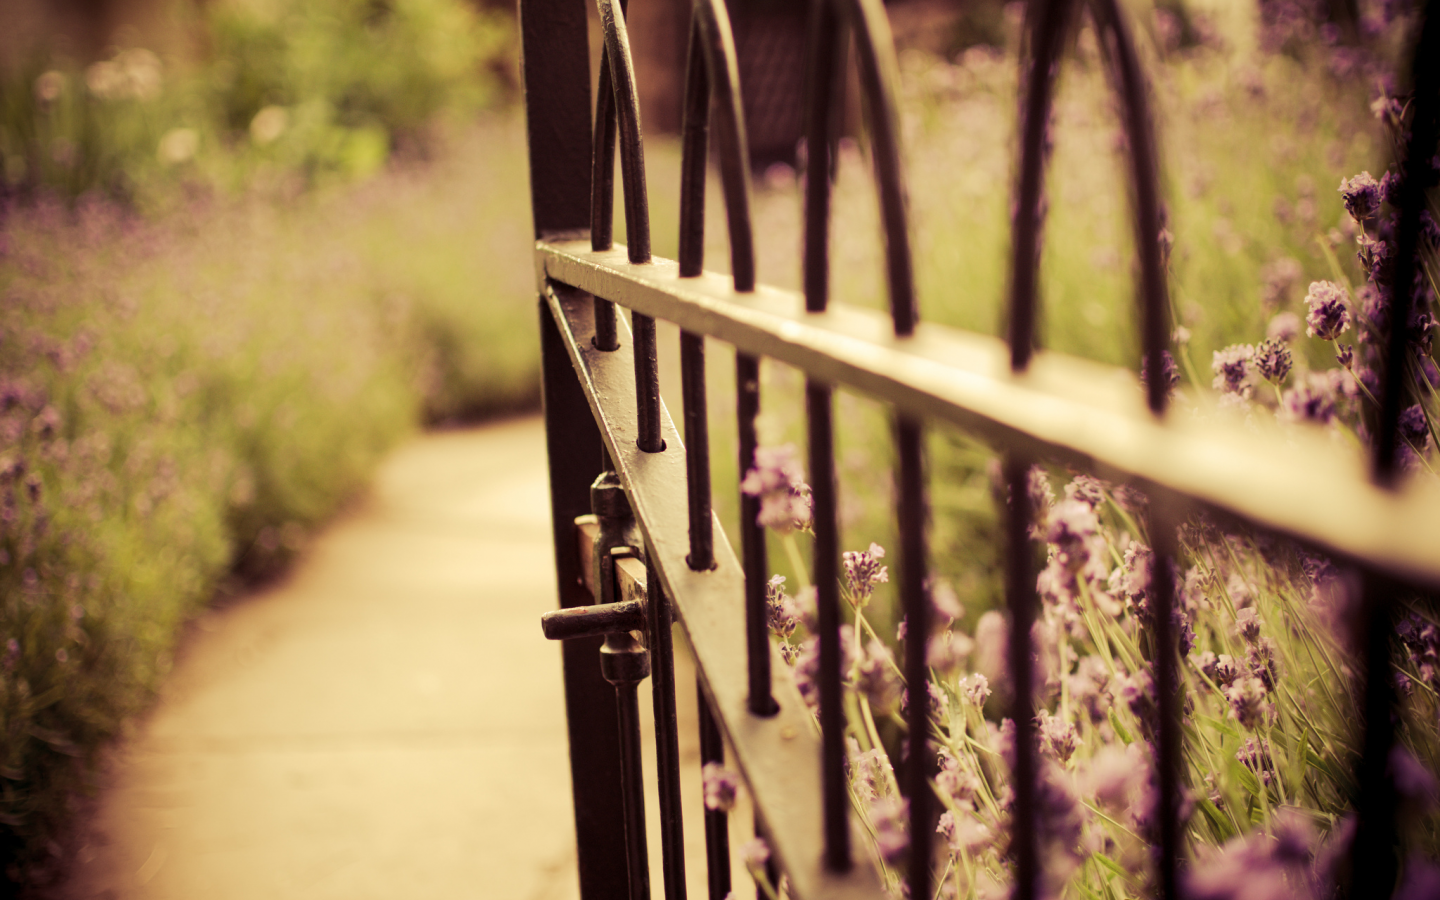 лаванда, ворота, калитка, цветы, забор, природа